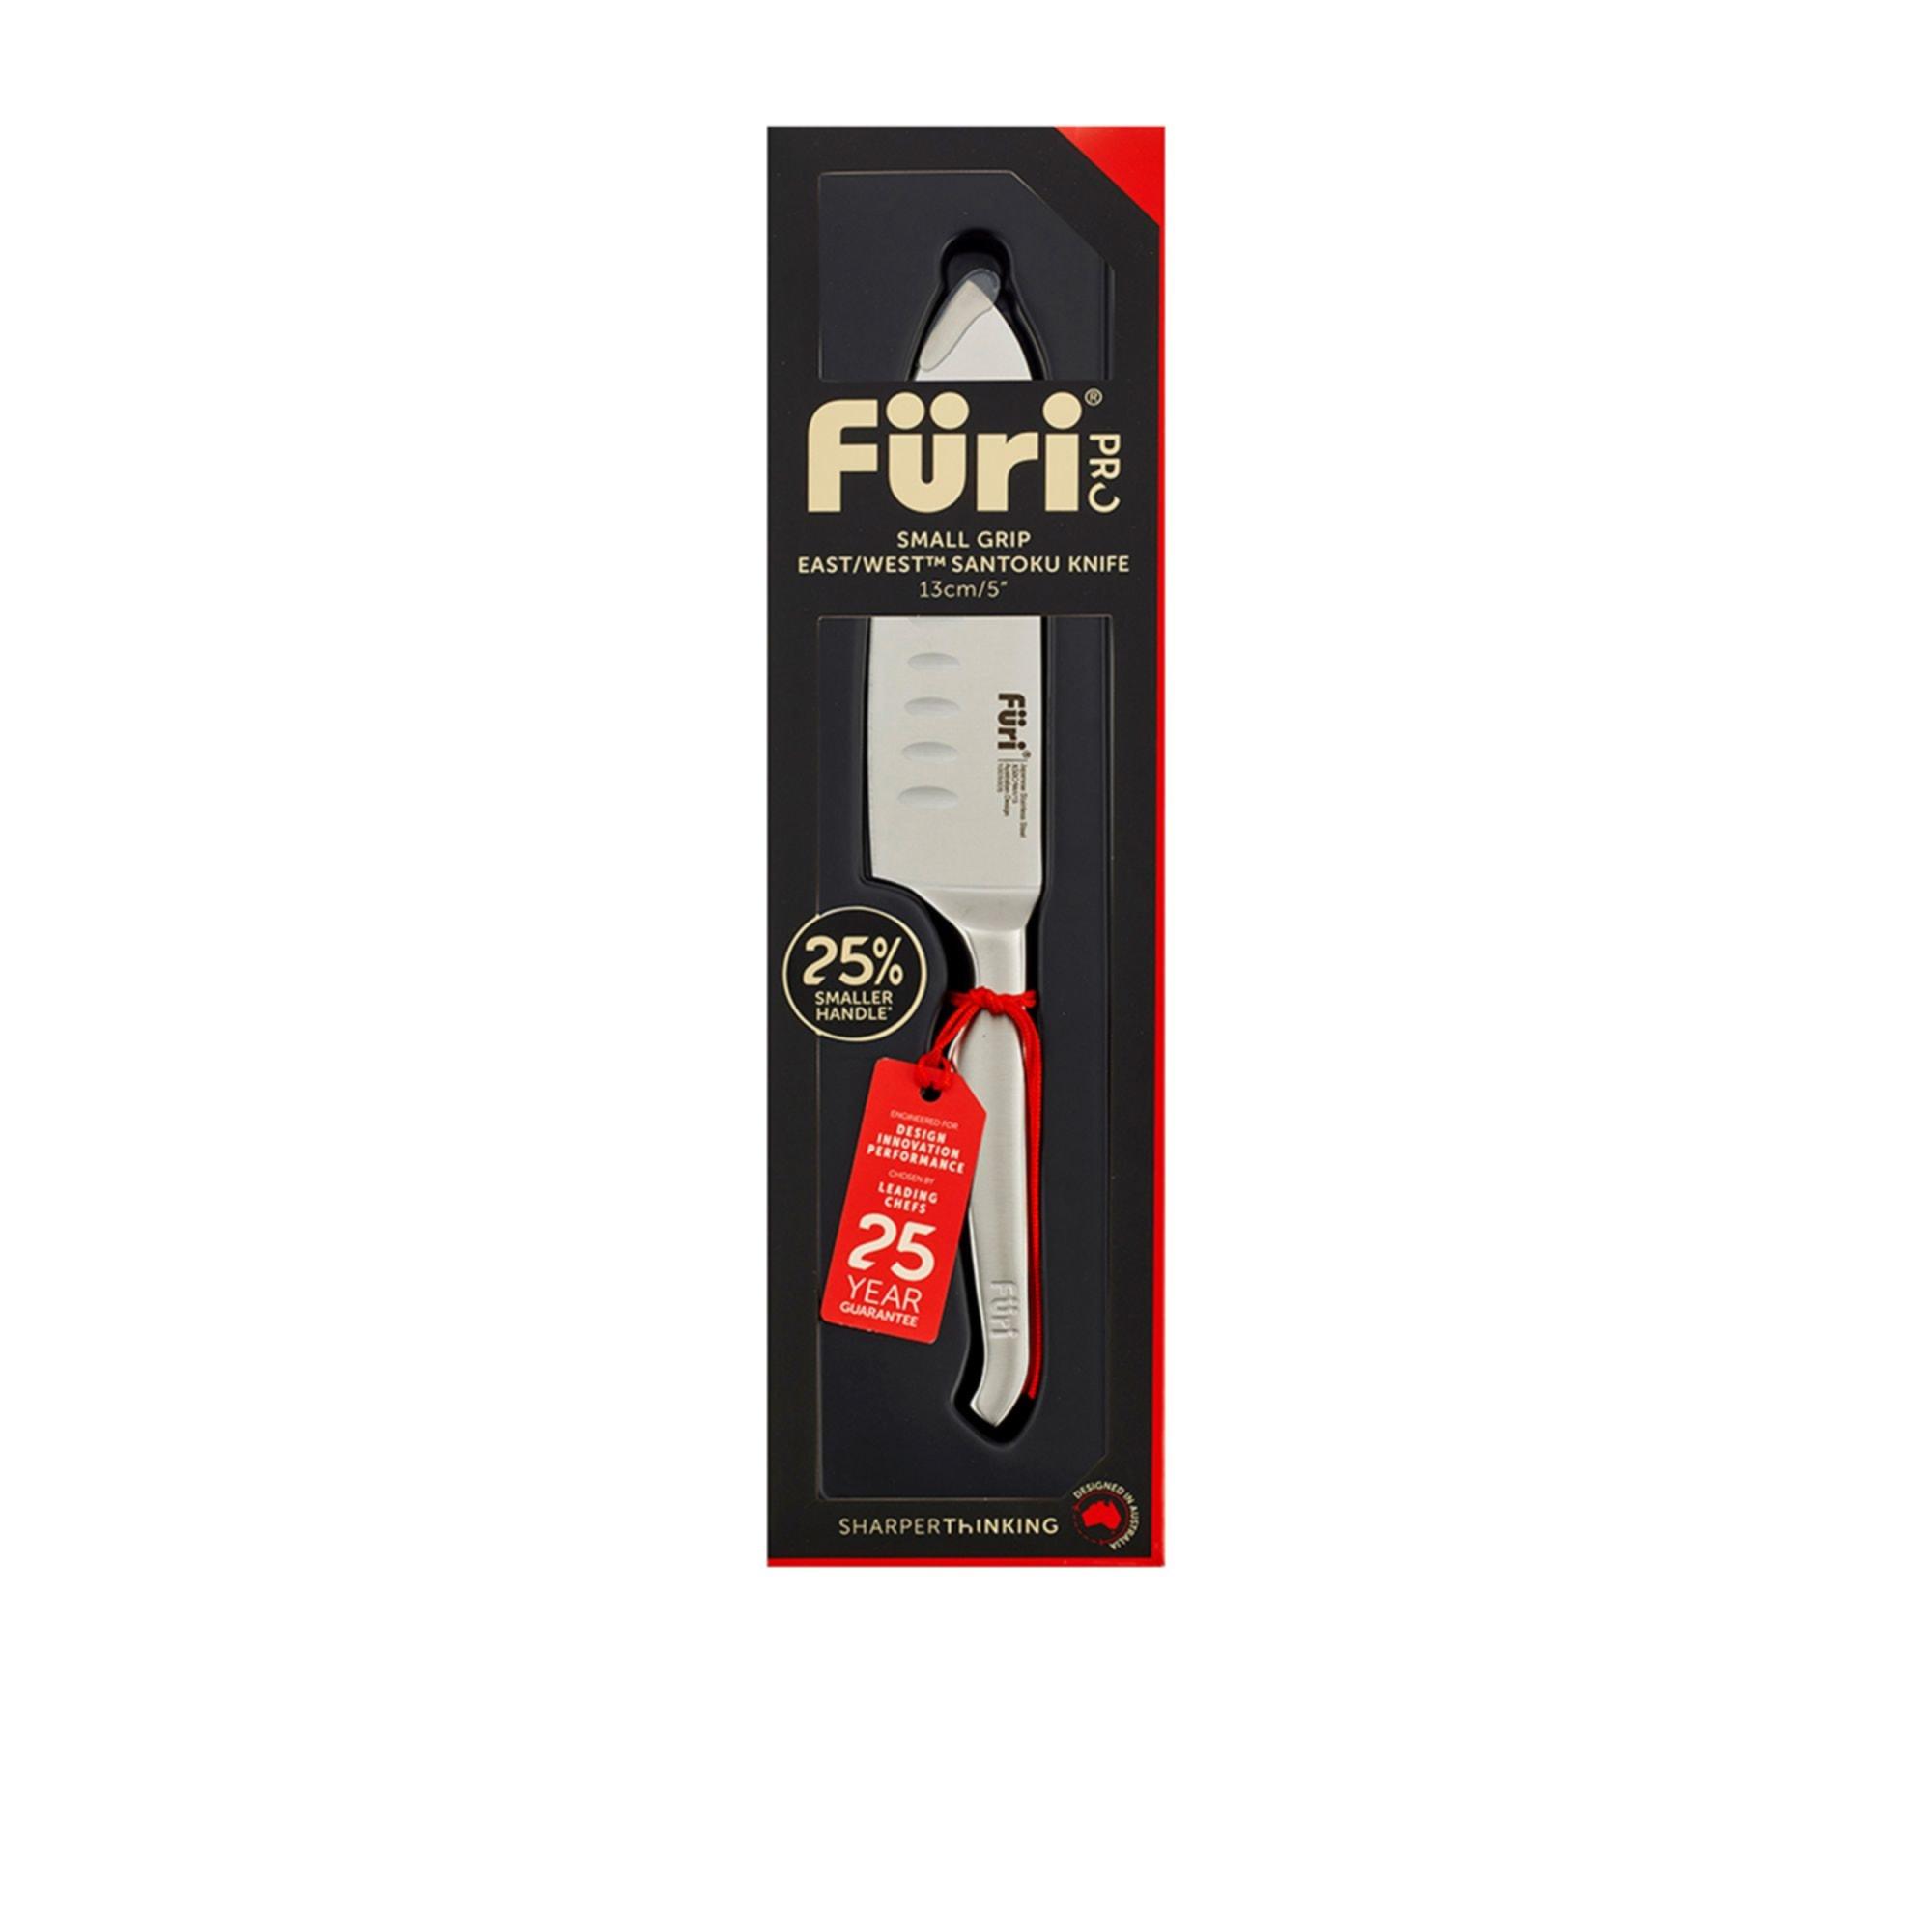 Furi Pro Small Grip East/West Santoku Knife 13cm Image 3